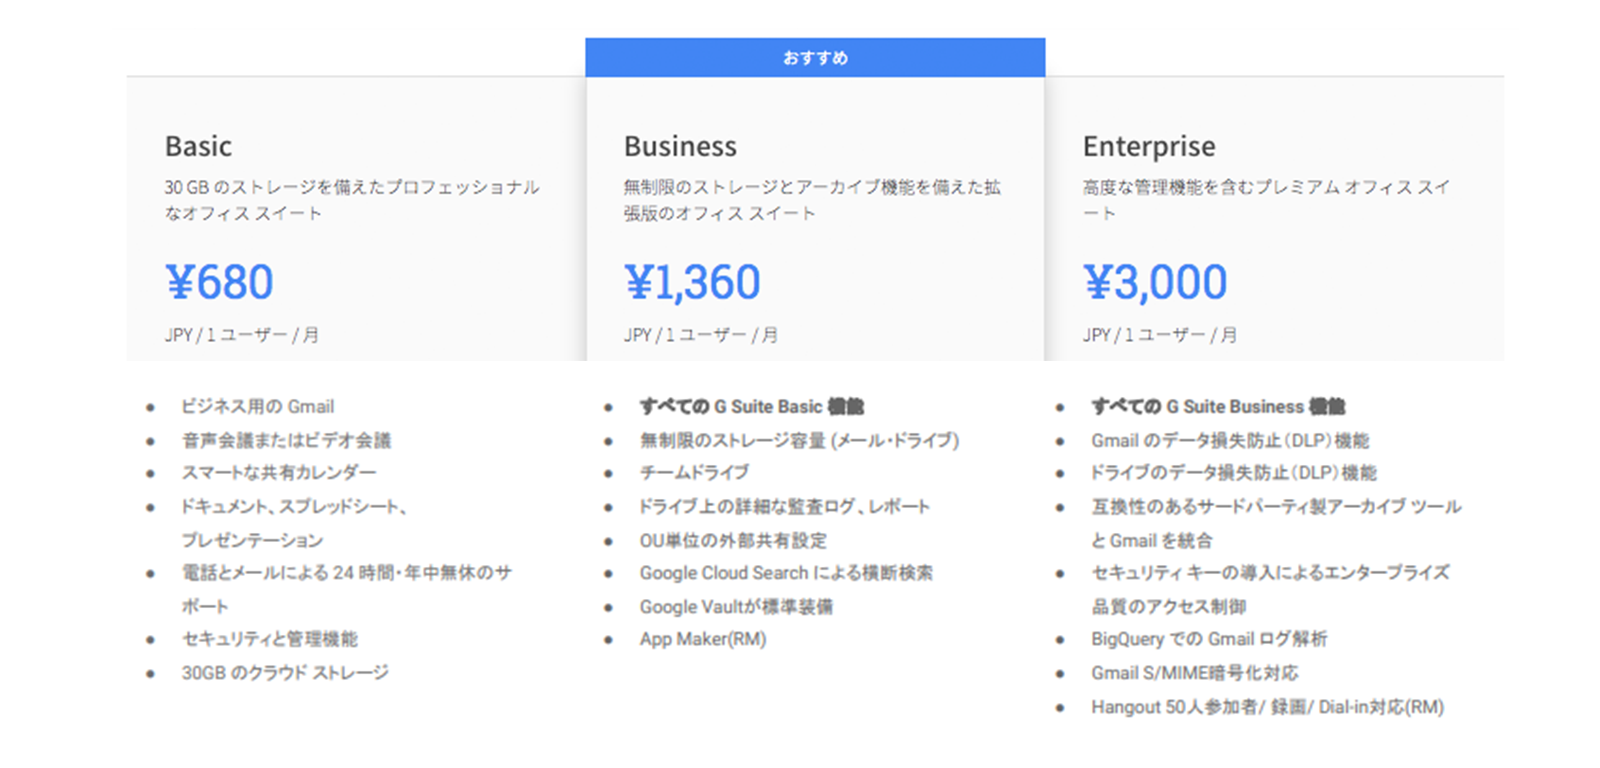 https://gsuite.google.co.jp/intl/ja/pricing.html 2019年6月17日最終アクセス およびG Suiteサービス説明資料より